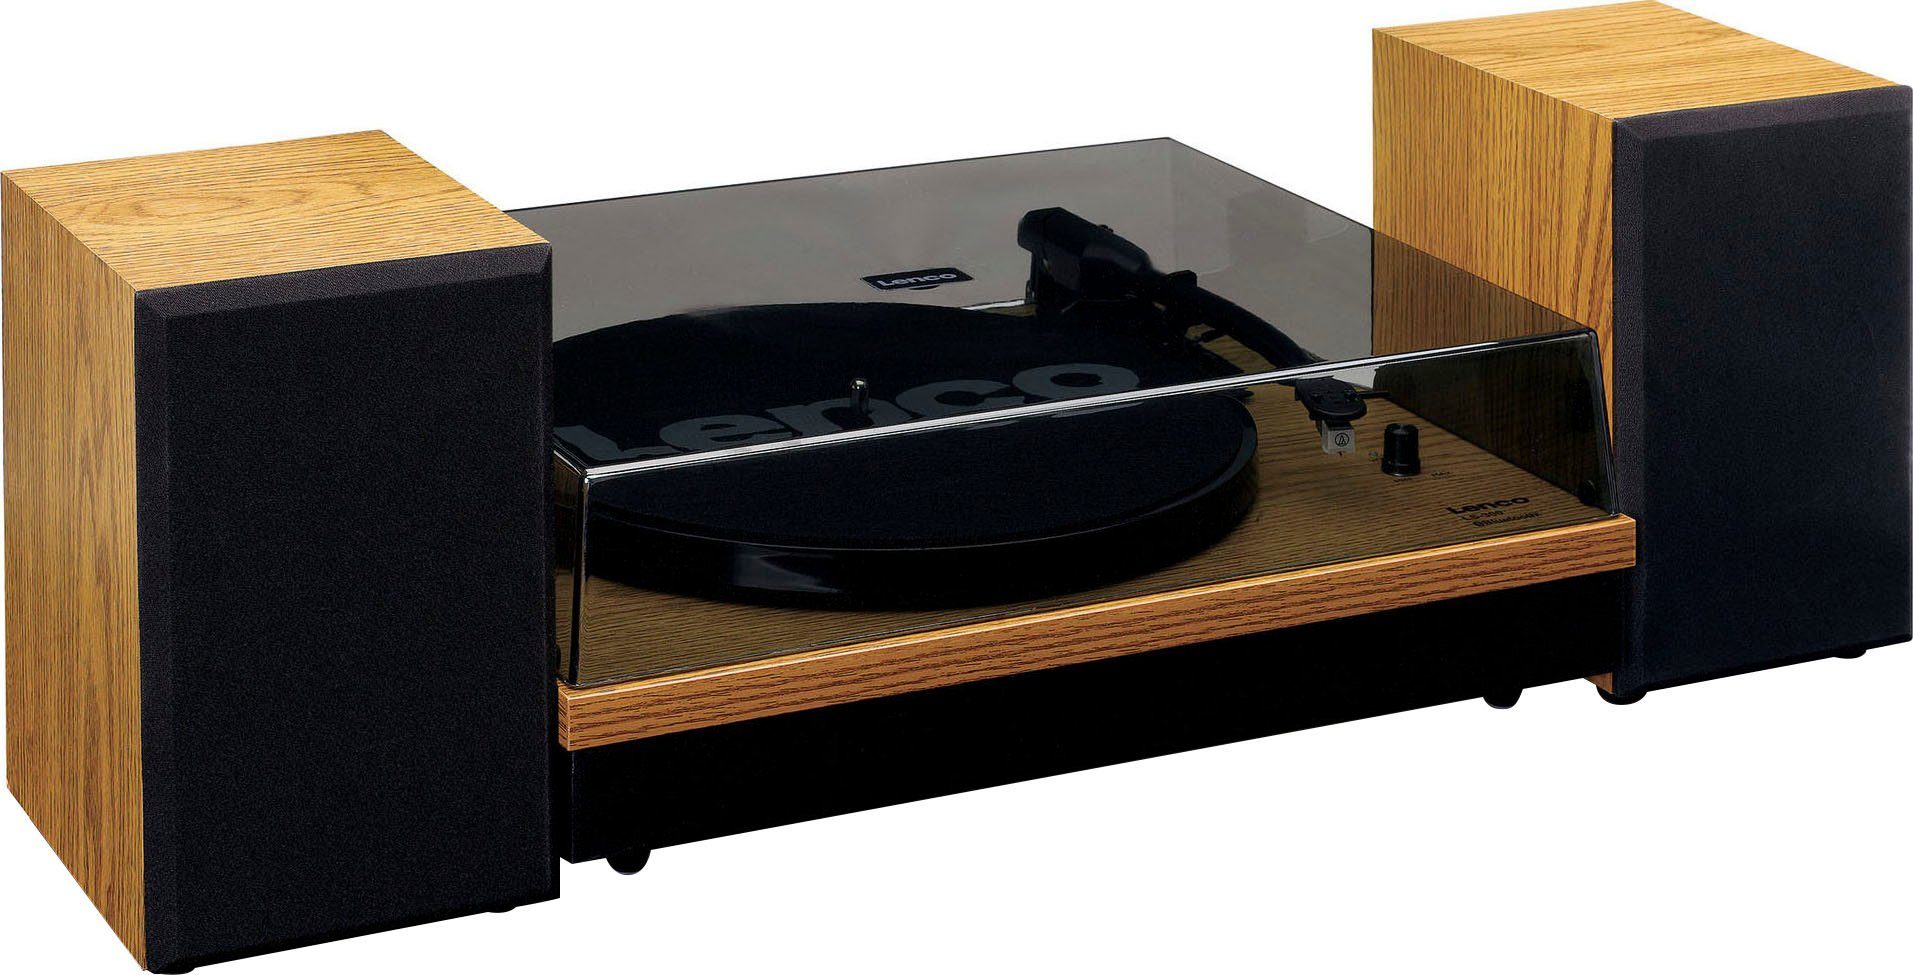 Lenco LS-300WD Plattenspieler mit ext. (Riemenantrieb) Lautsprechern Holz Plattenspieler